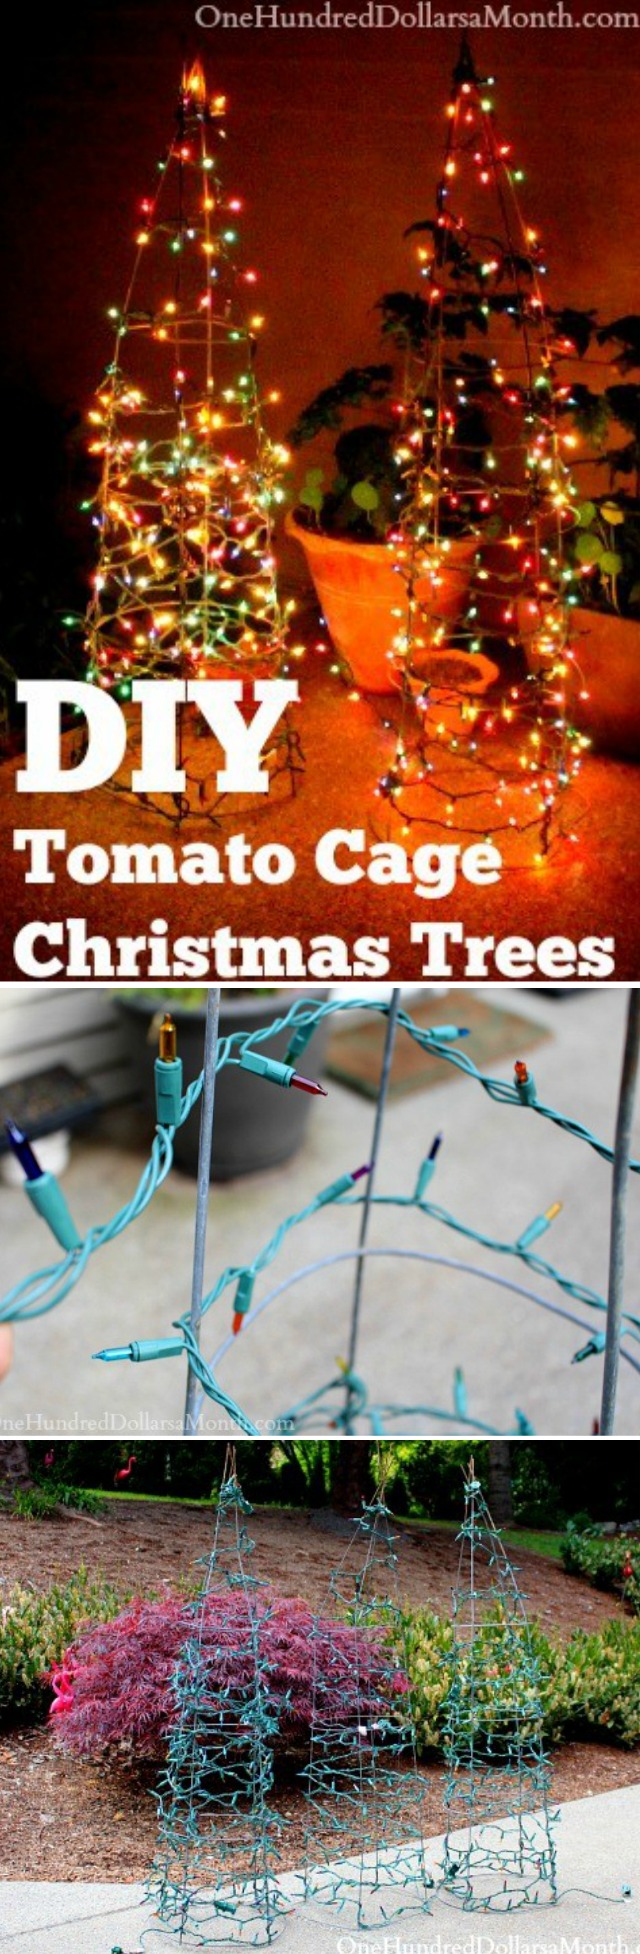 DIY Tomato Cage Christmas Trees